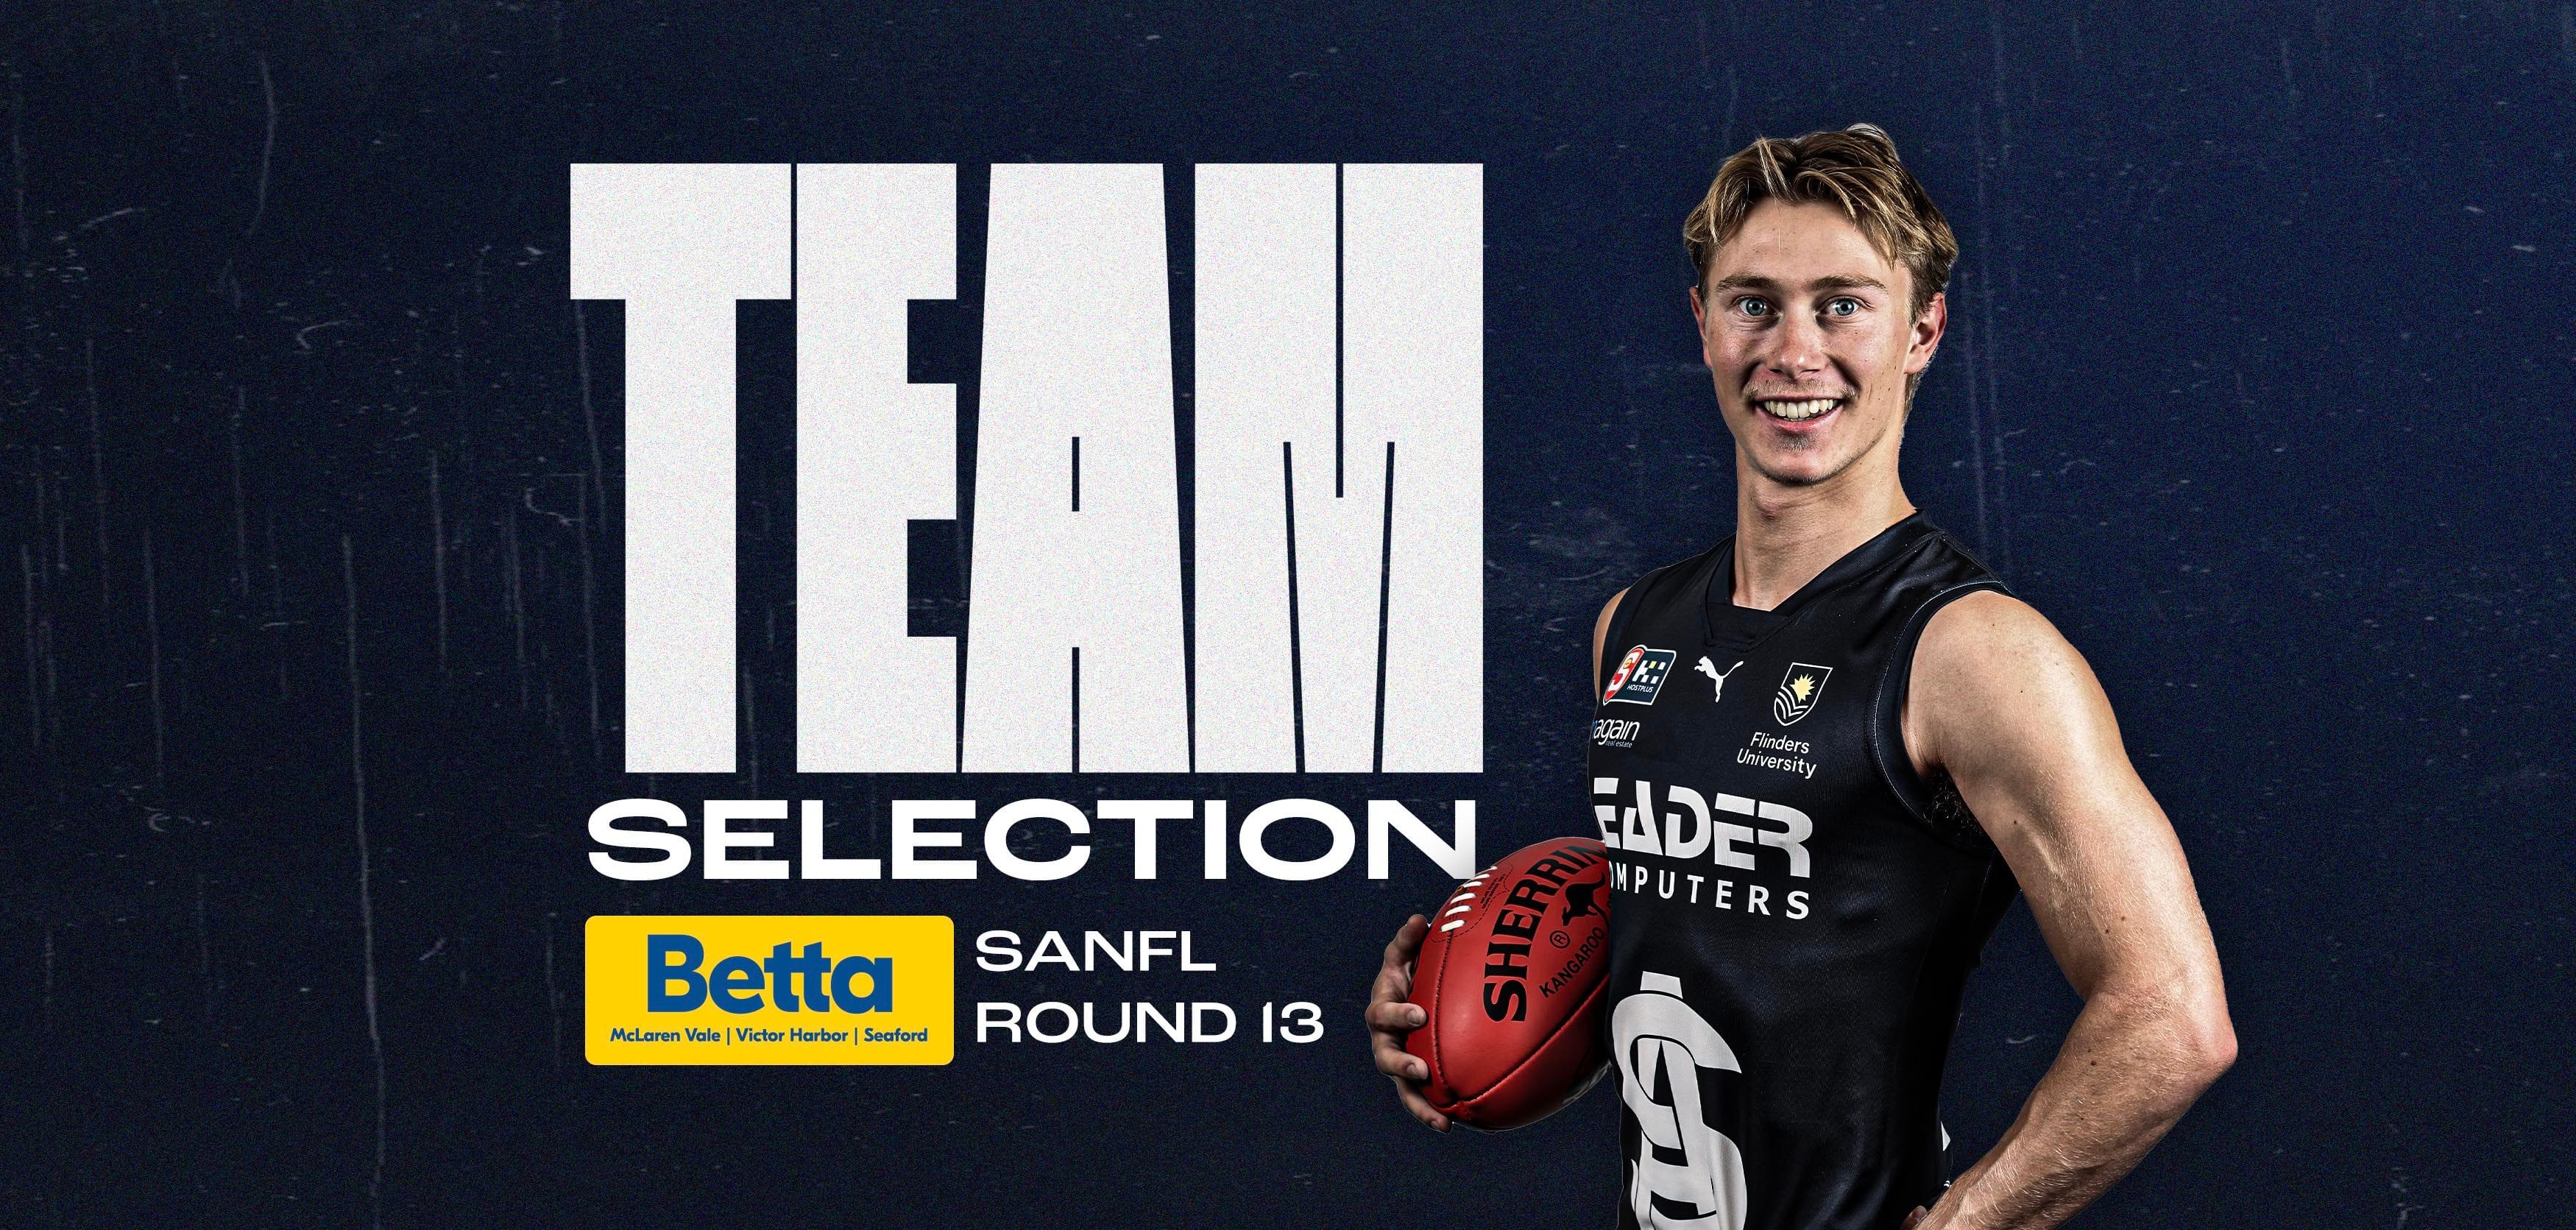 BETTA Team Selection: SANFL Round 13 v Sturt